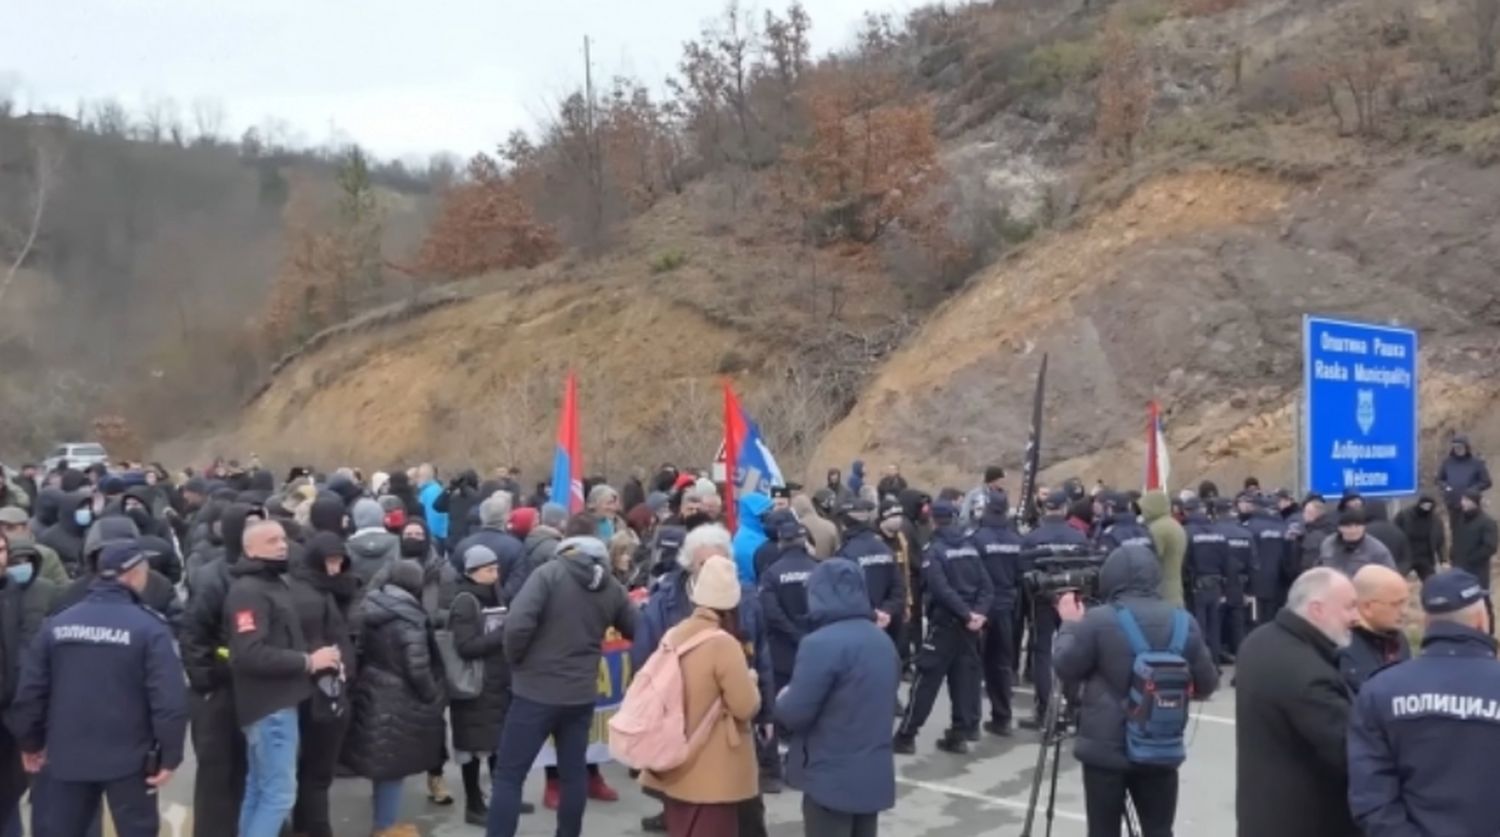 Preşedintele intervine în tensiunile din Kosovo: Demontați baricadele!